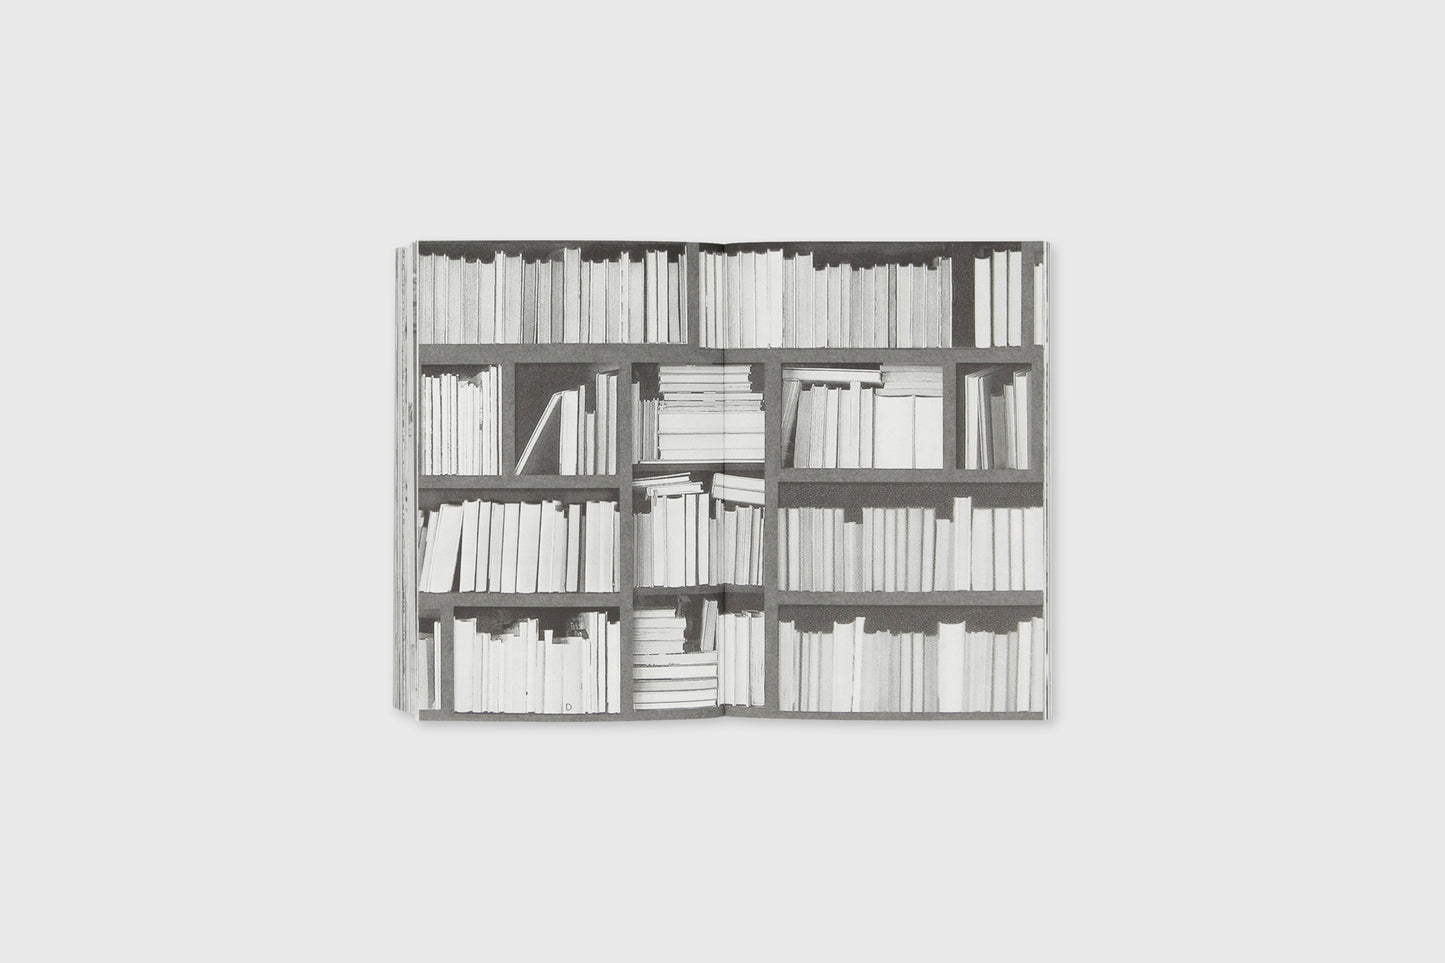 Federico Antonini: Simplifying My Library